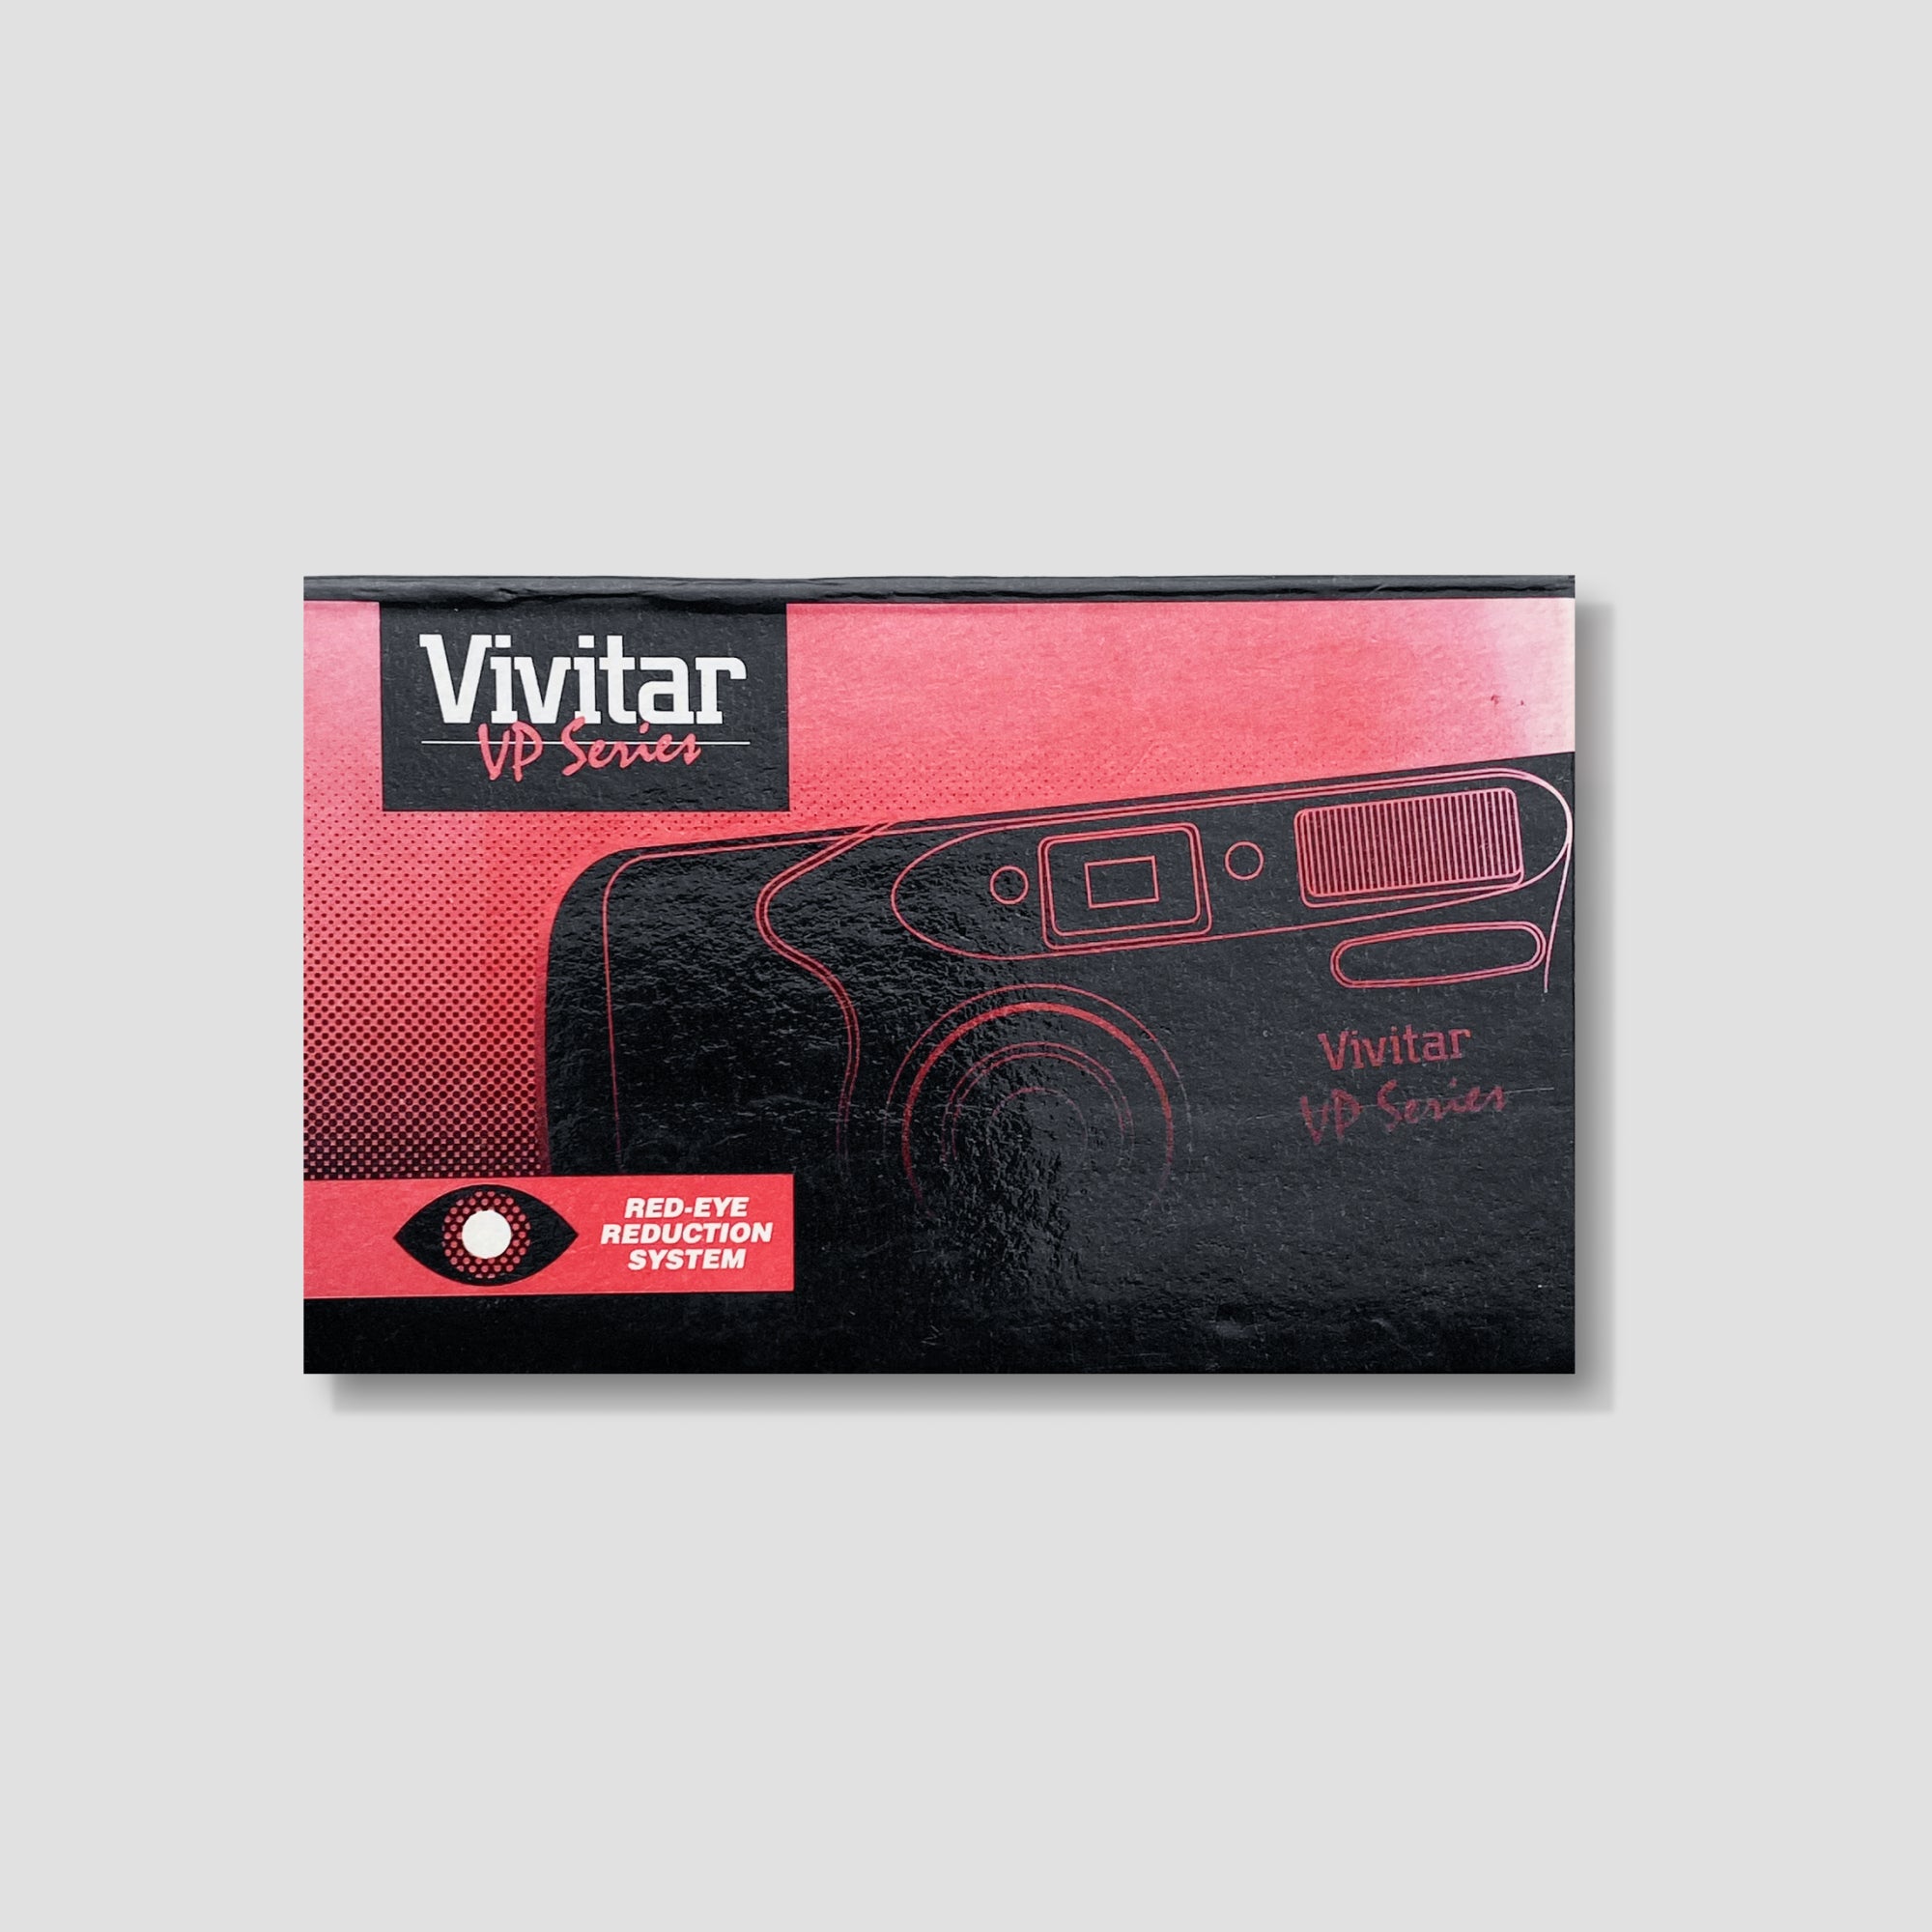 Vivitar VP Series - VP2 Motor